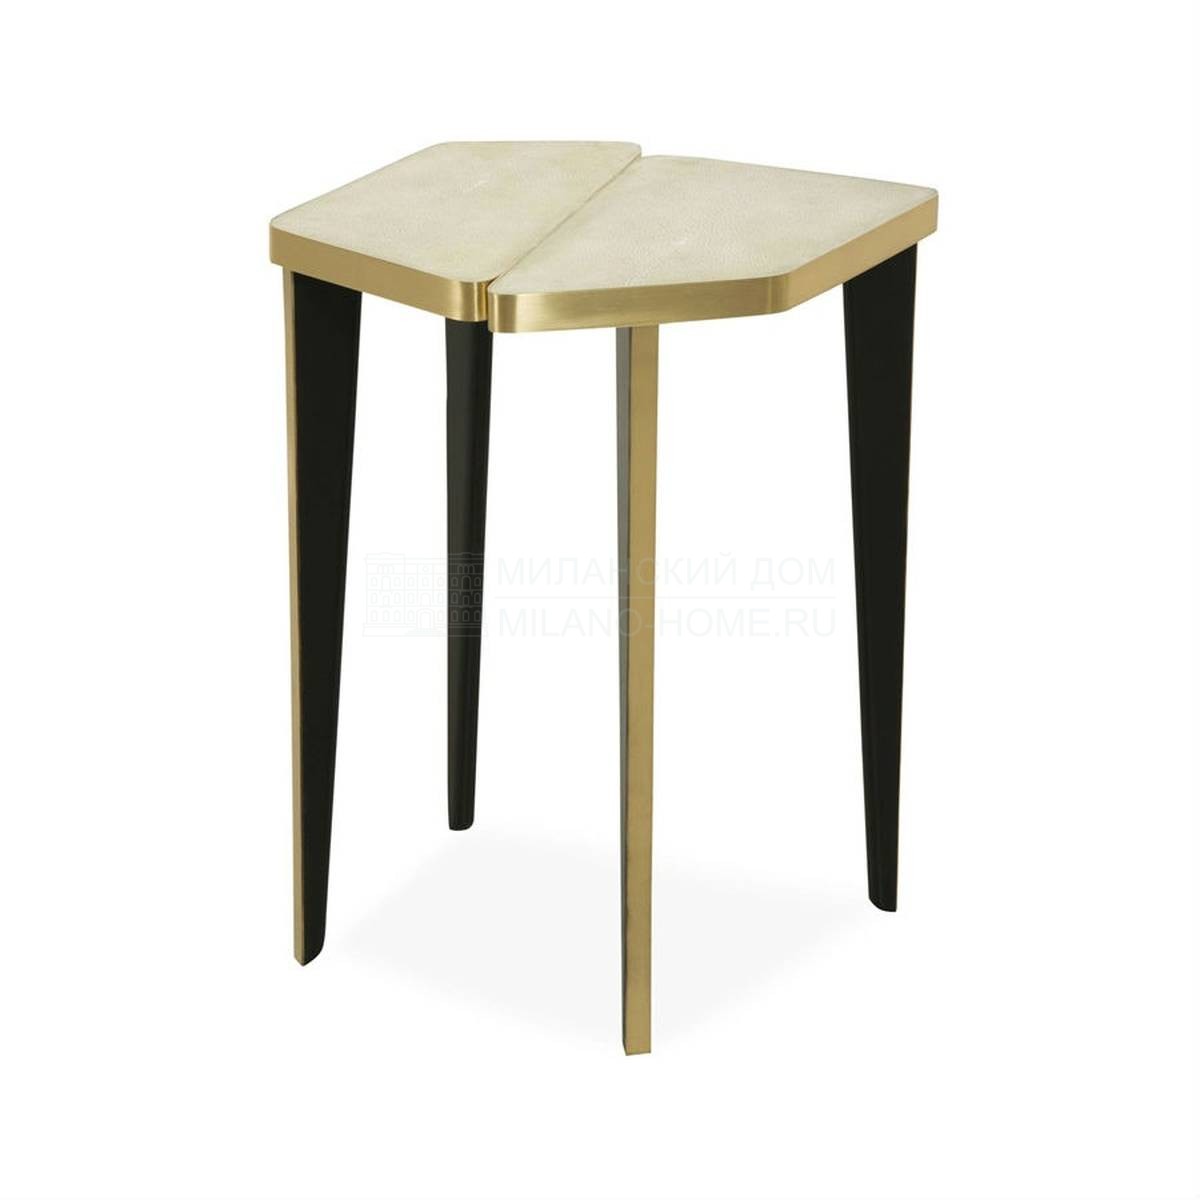 Кофейный столик Venus side table из Великобритании фабрики THE SOFA & CHAIR Company